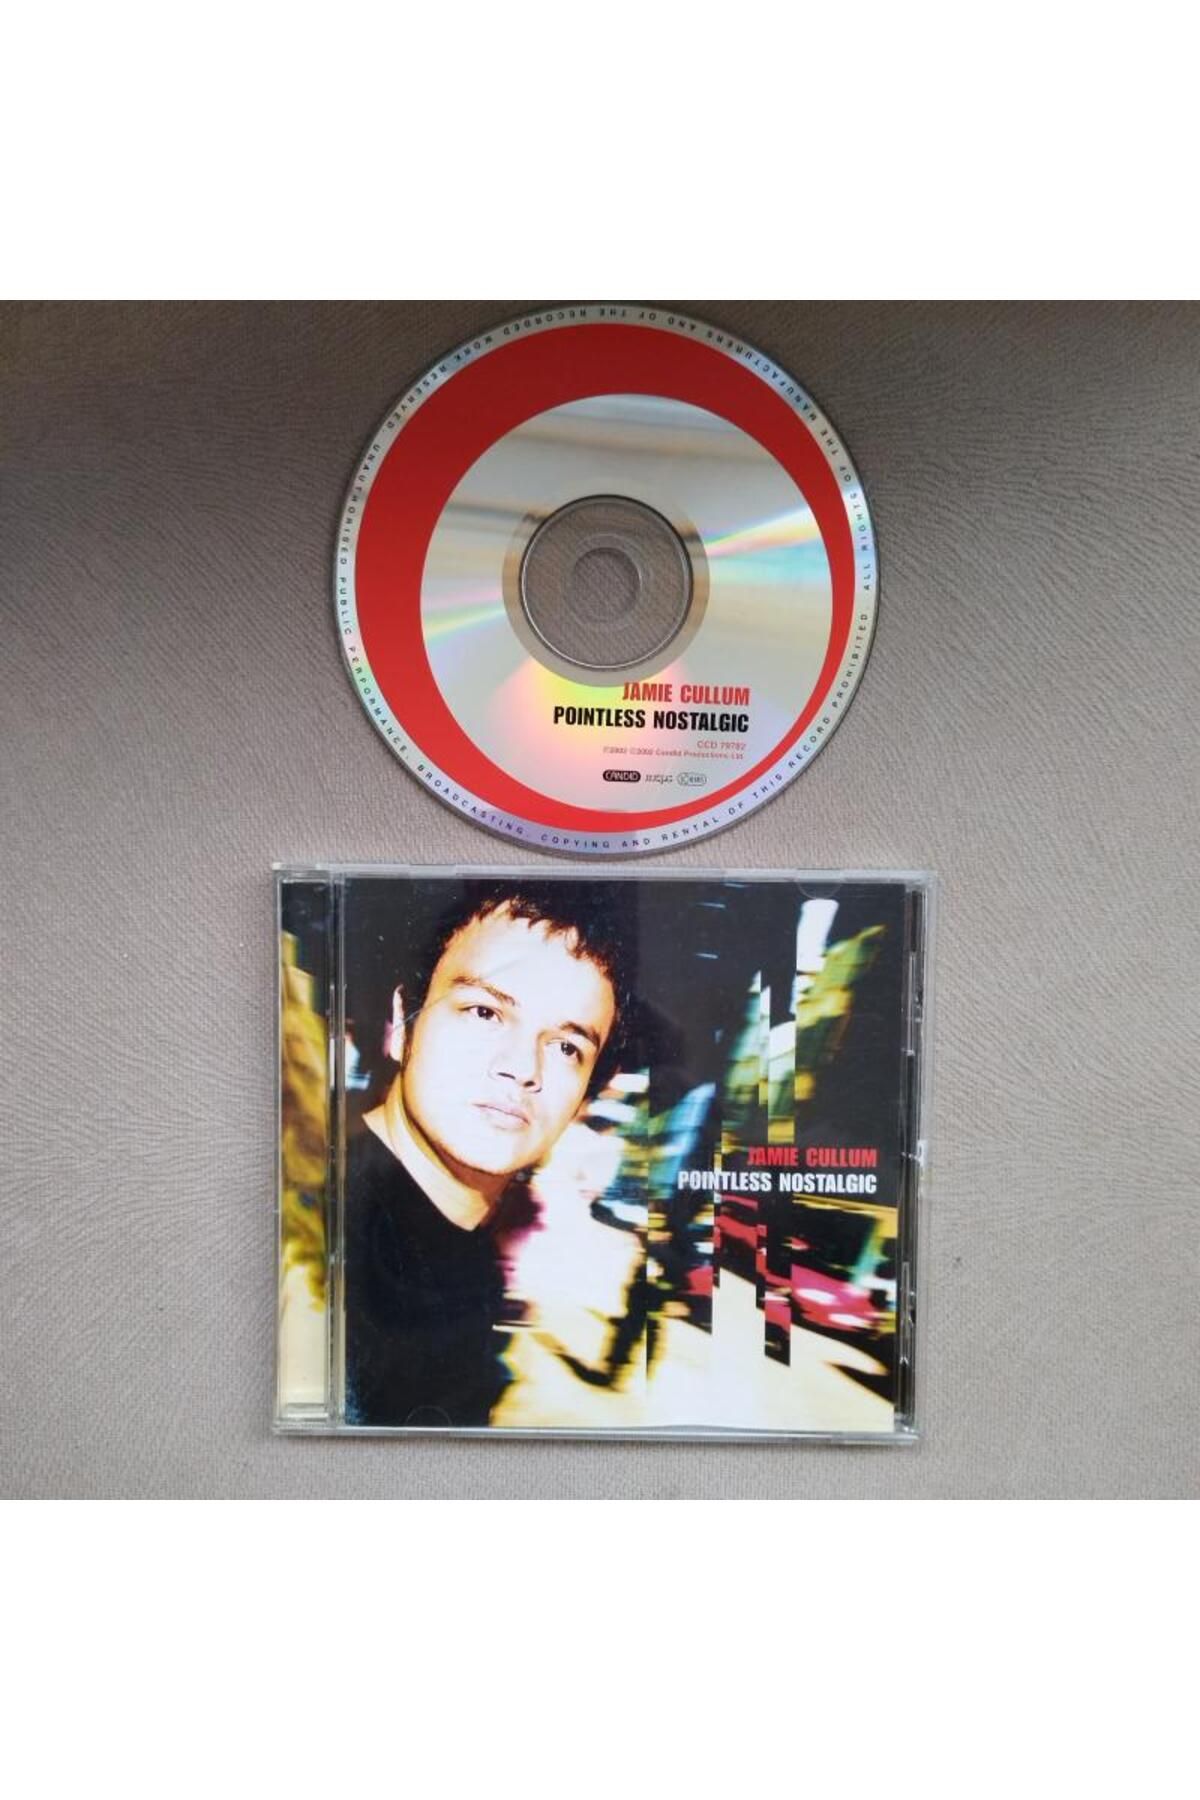 CD Jamie Cullum  –  Pointless Nostalgic   -  2002 İngiltere  Basım - 2. El  CD Albüm